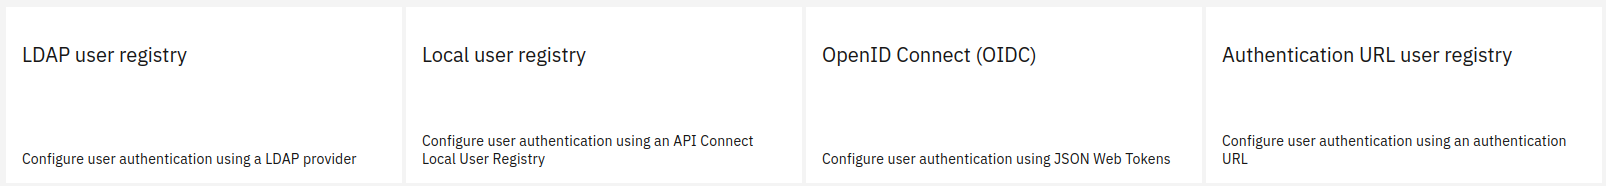 IBM API Connect User registries types